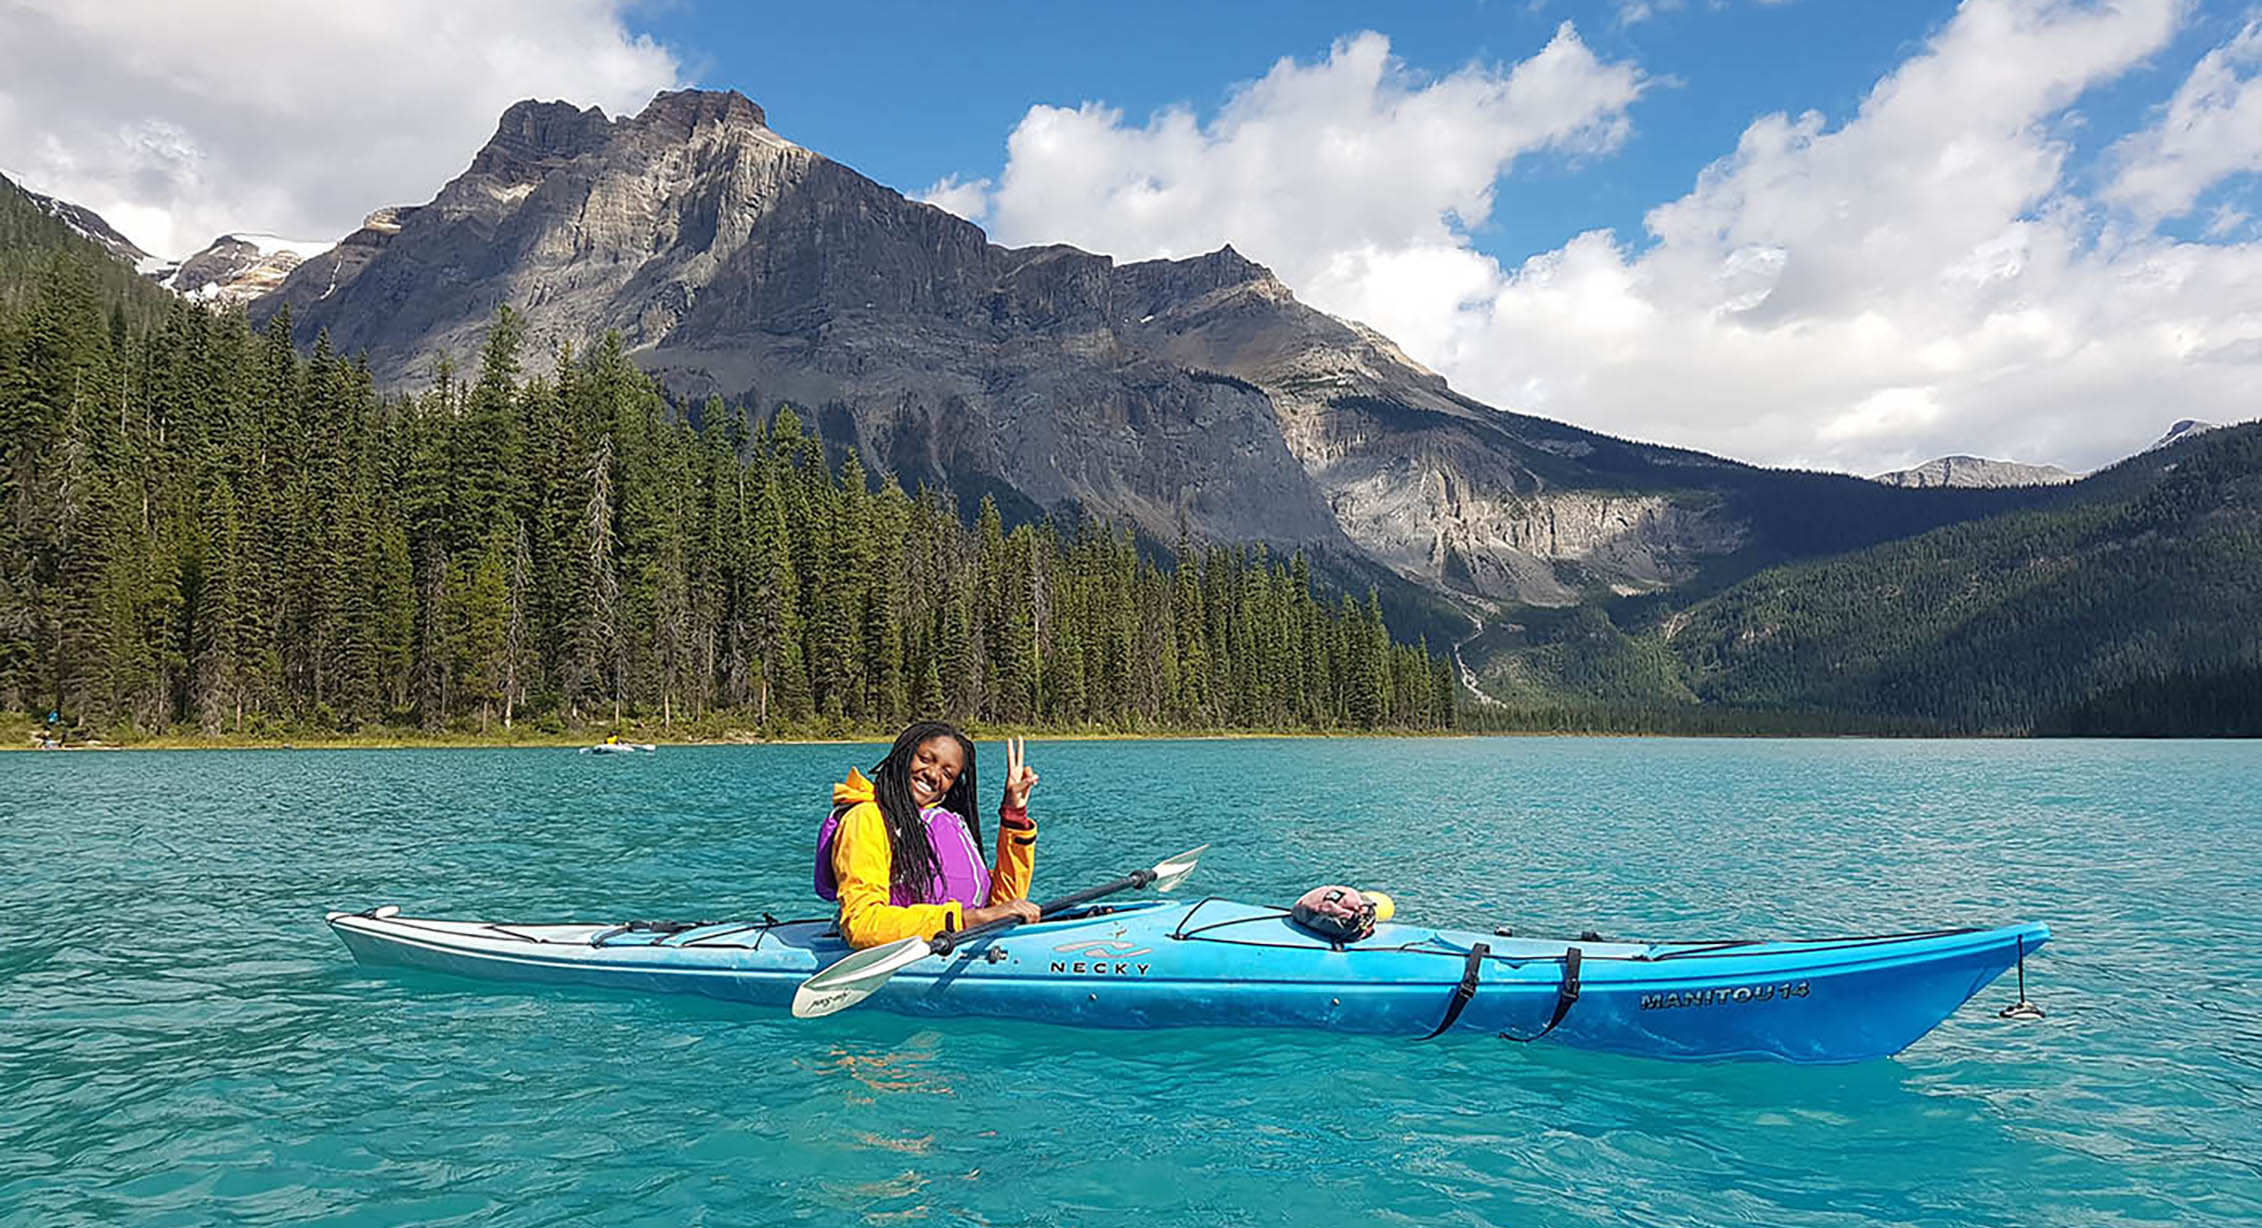 Kayaking in the Canadian Rockies